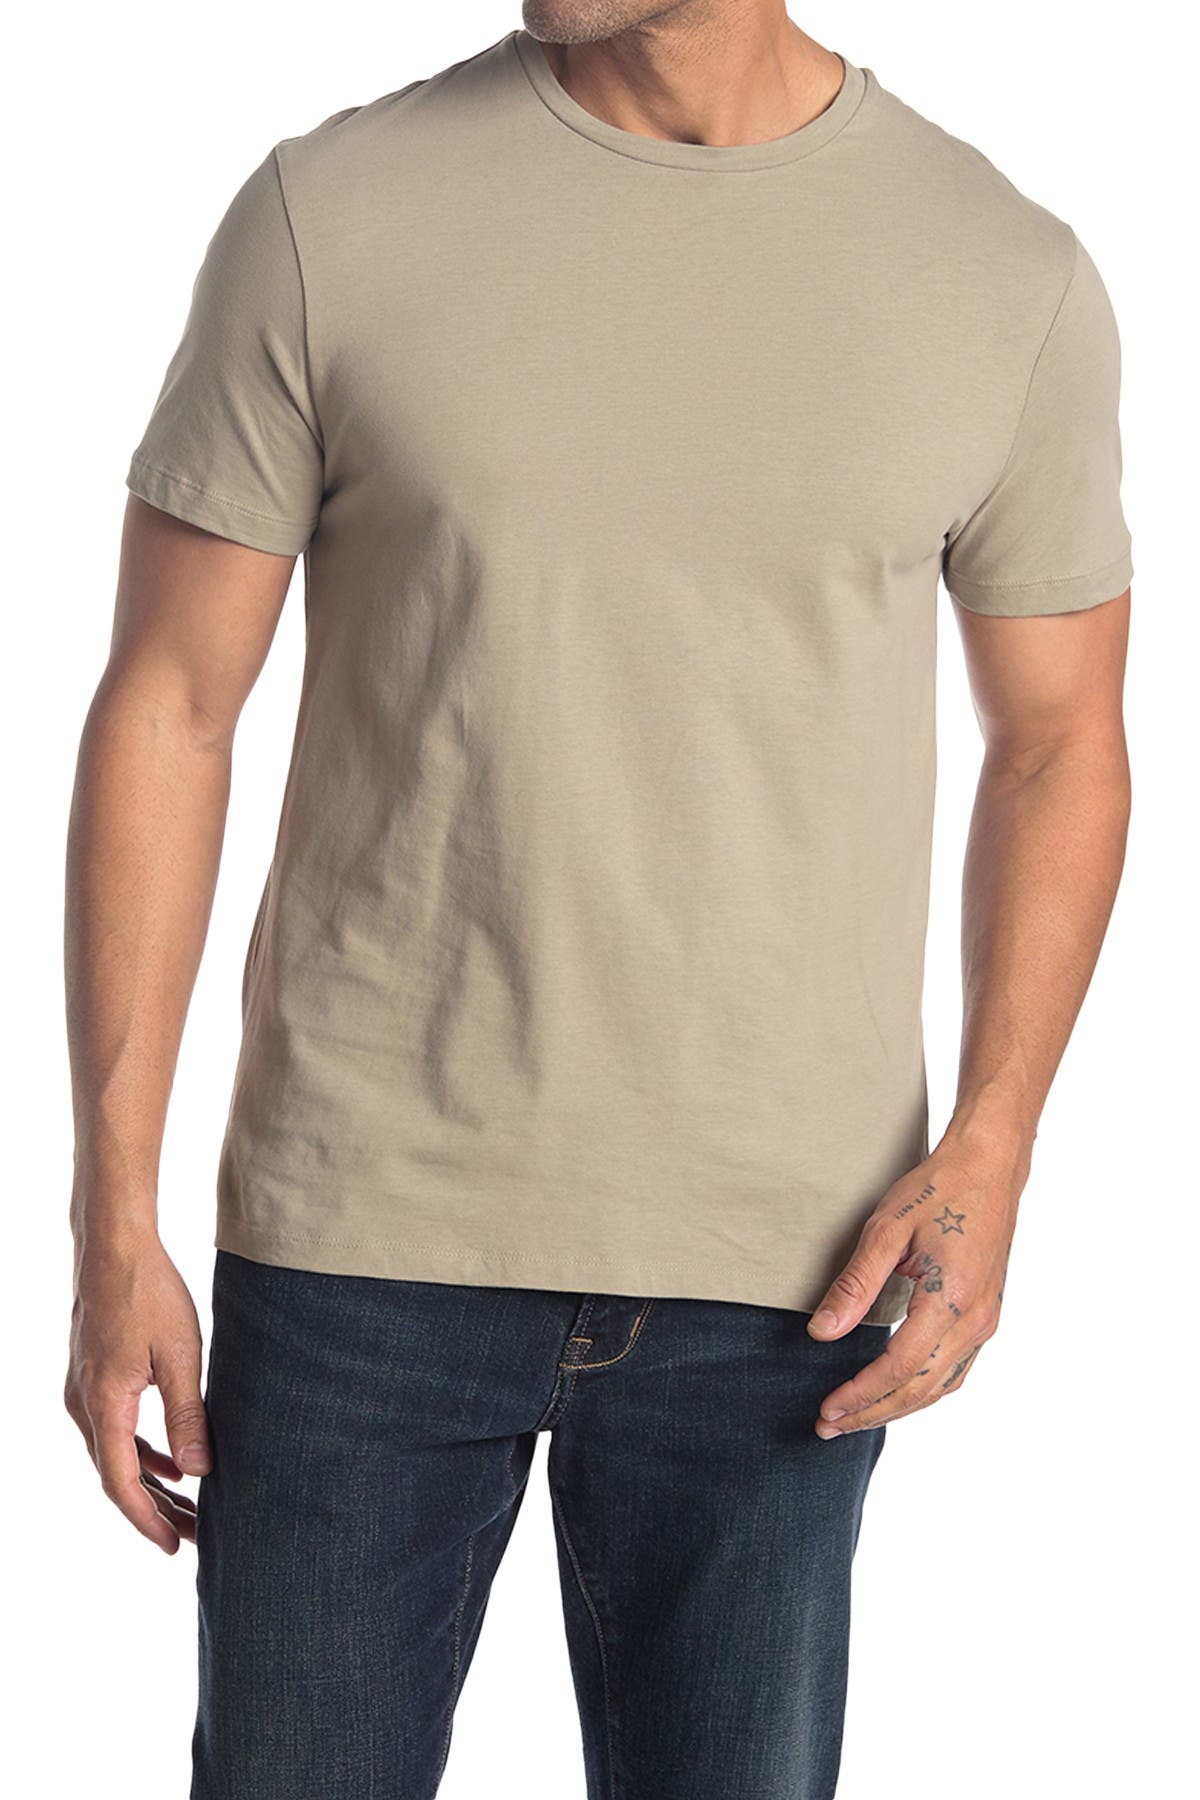 Allsaints Hale Crew Neck T-shirt In Medium Grey1